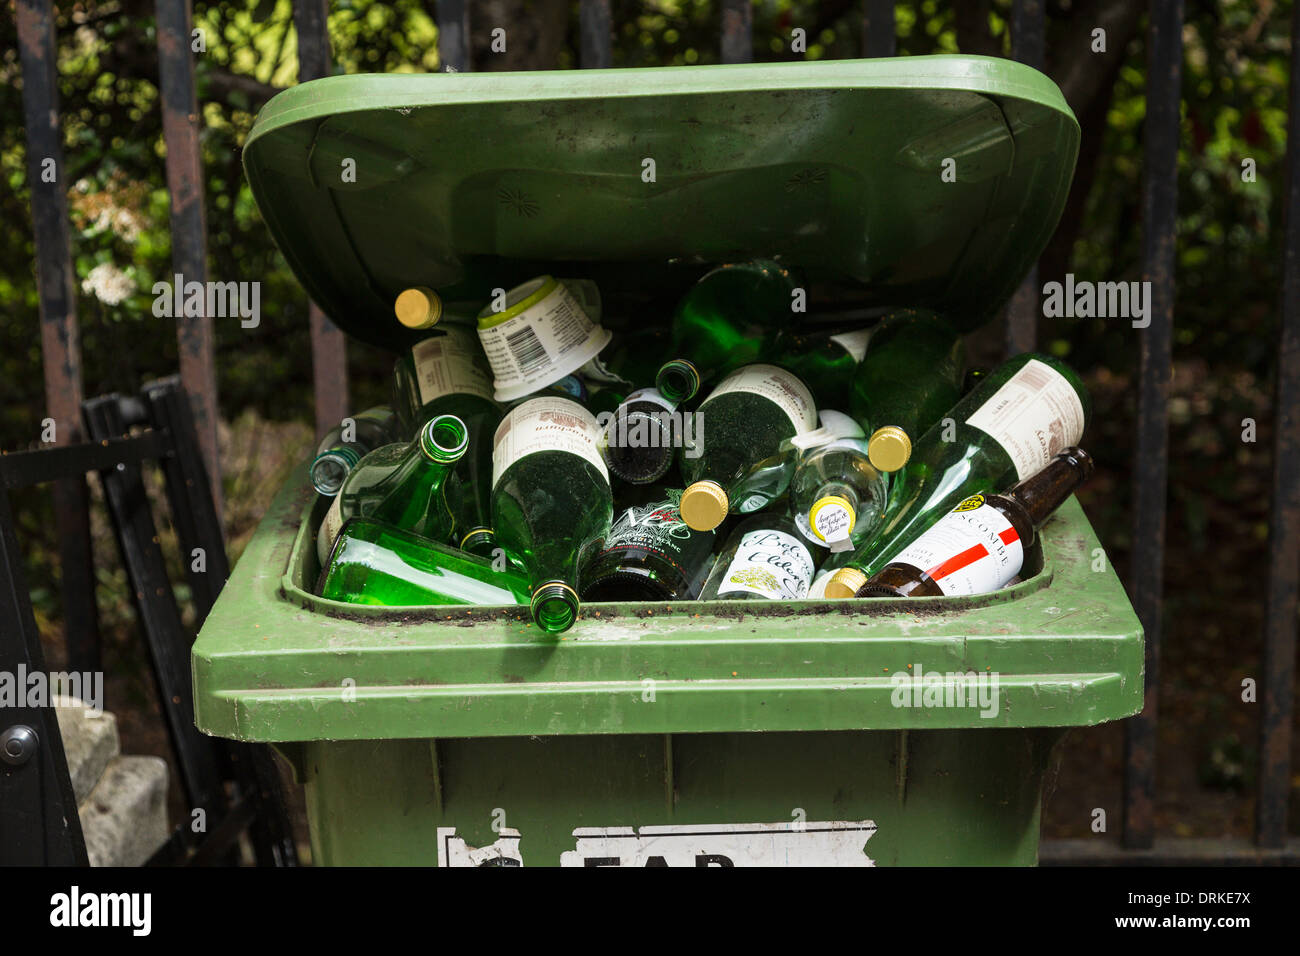 Green glass recycling bin full of bottles Stock Photo